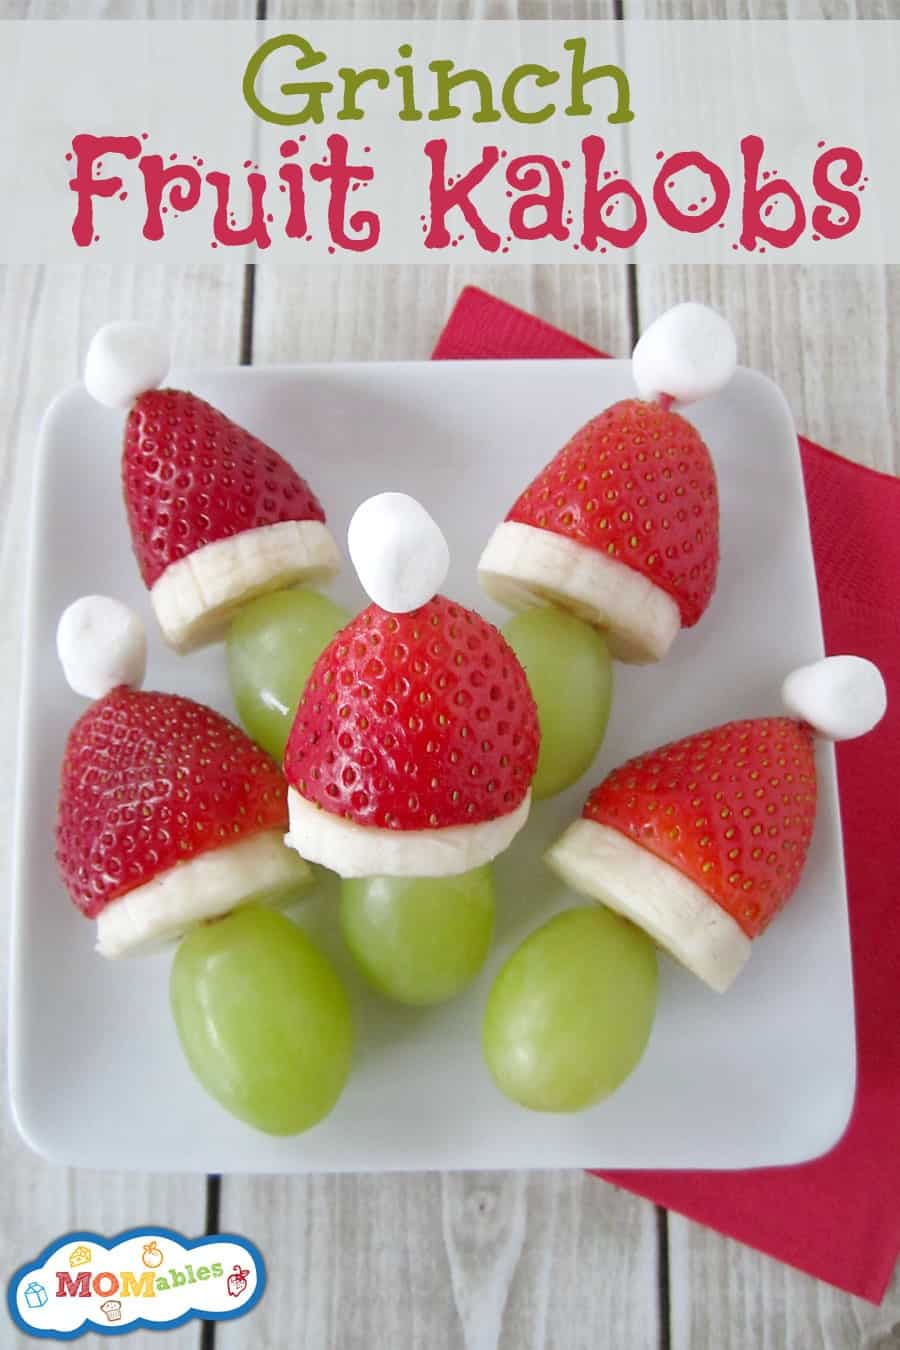 grapes tops with Santa inspired hats made of strawberries, bananas, and marshmallows